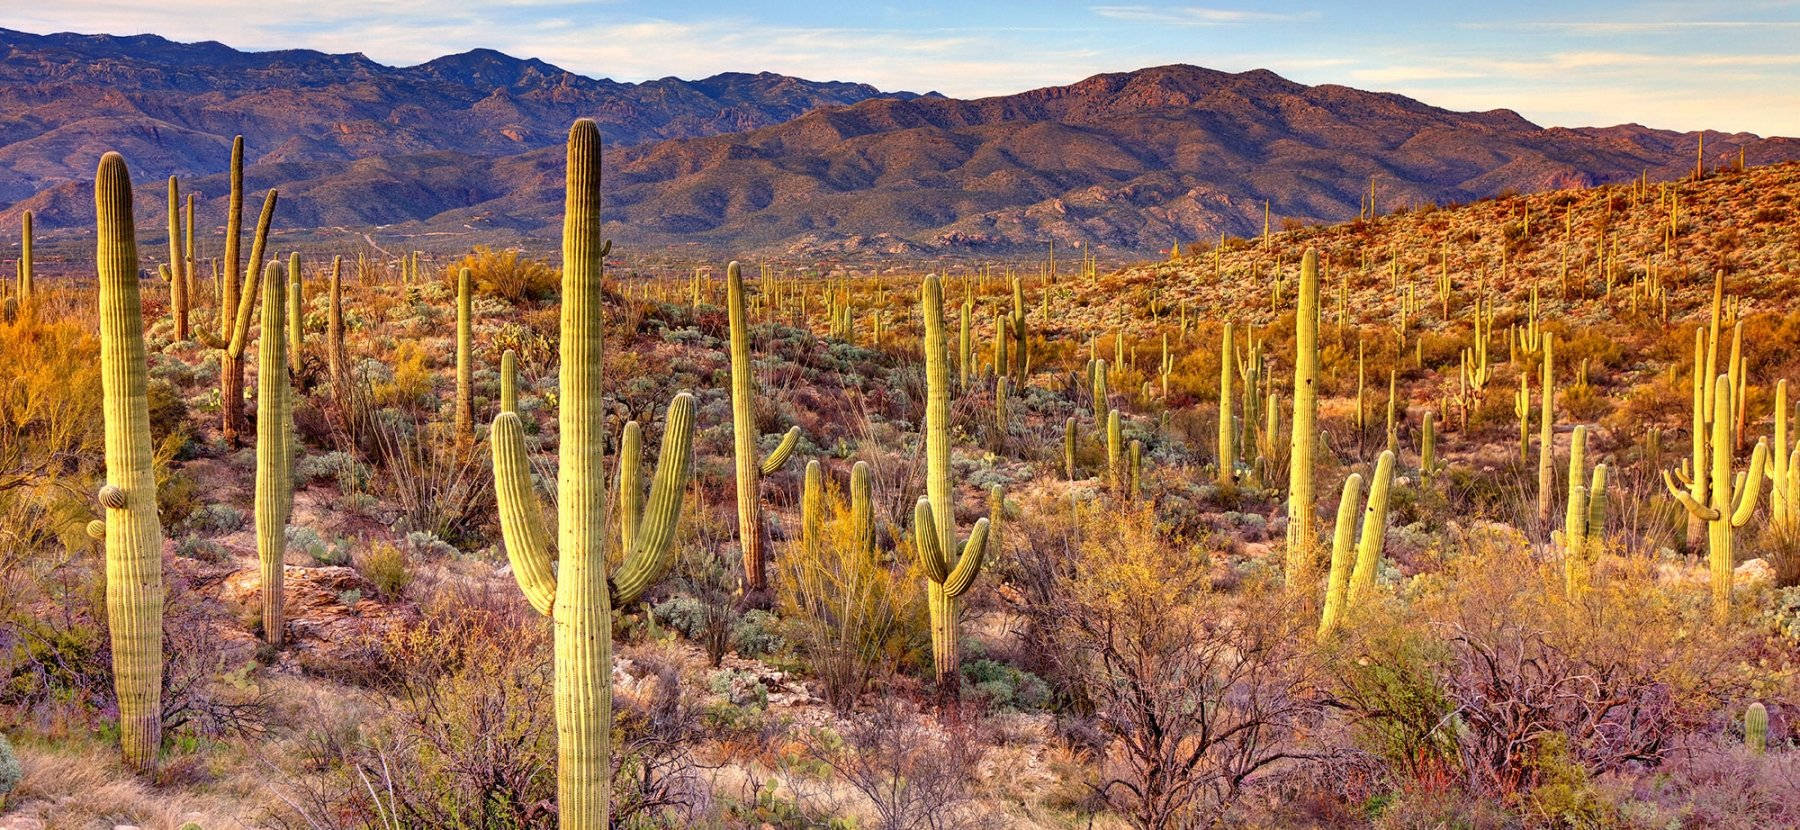 Arizona Desert Cactus Garden Wallpaper